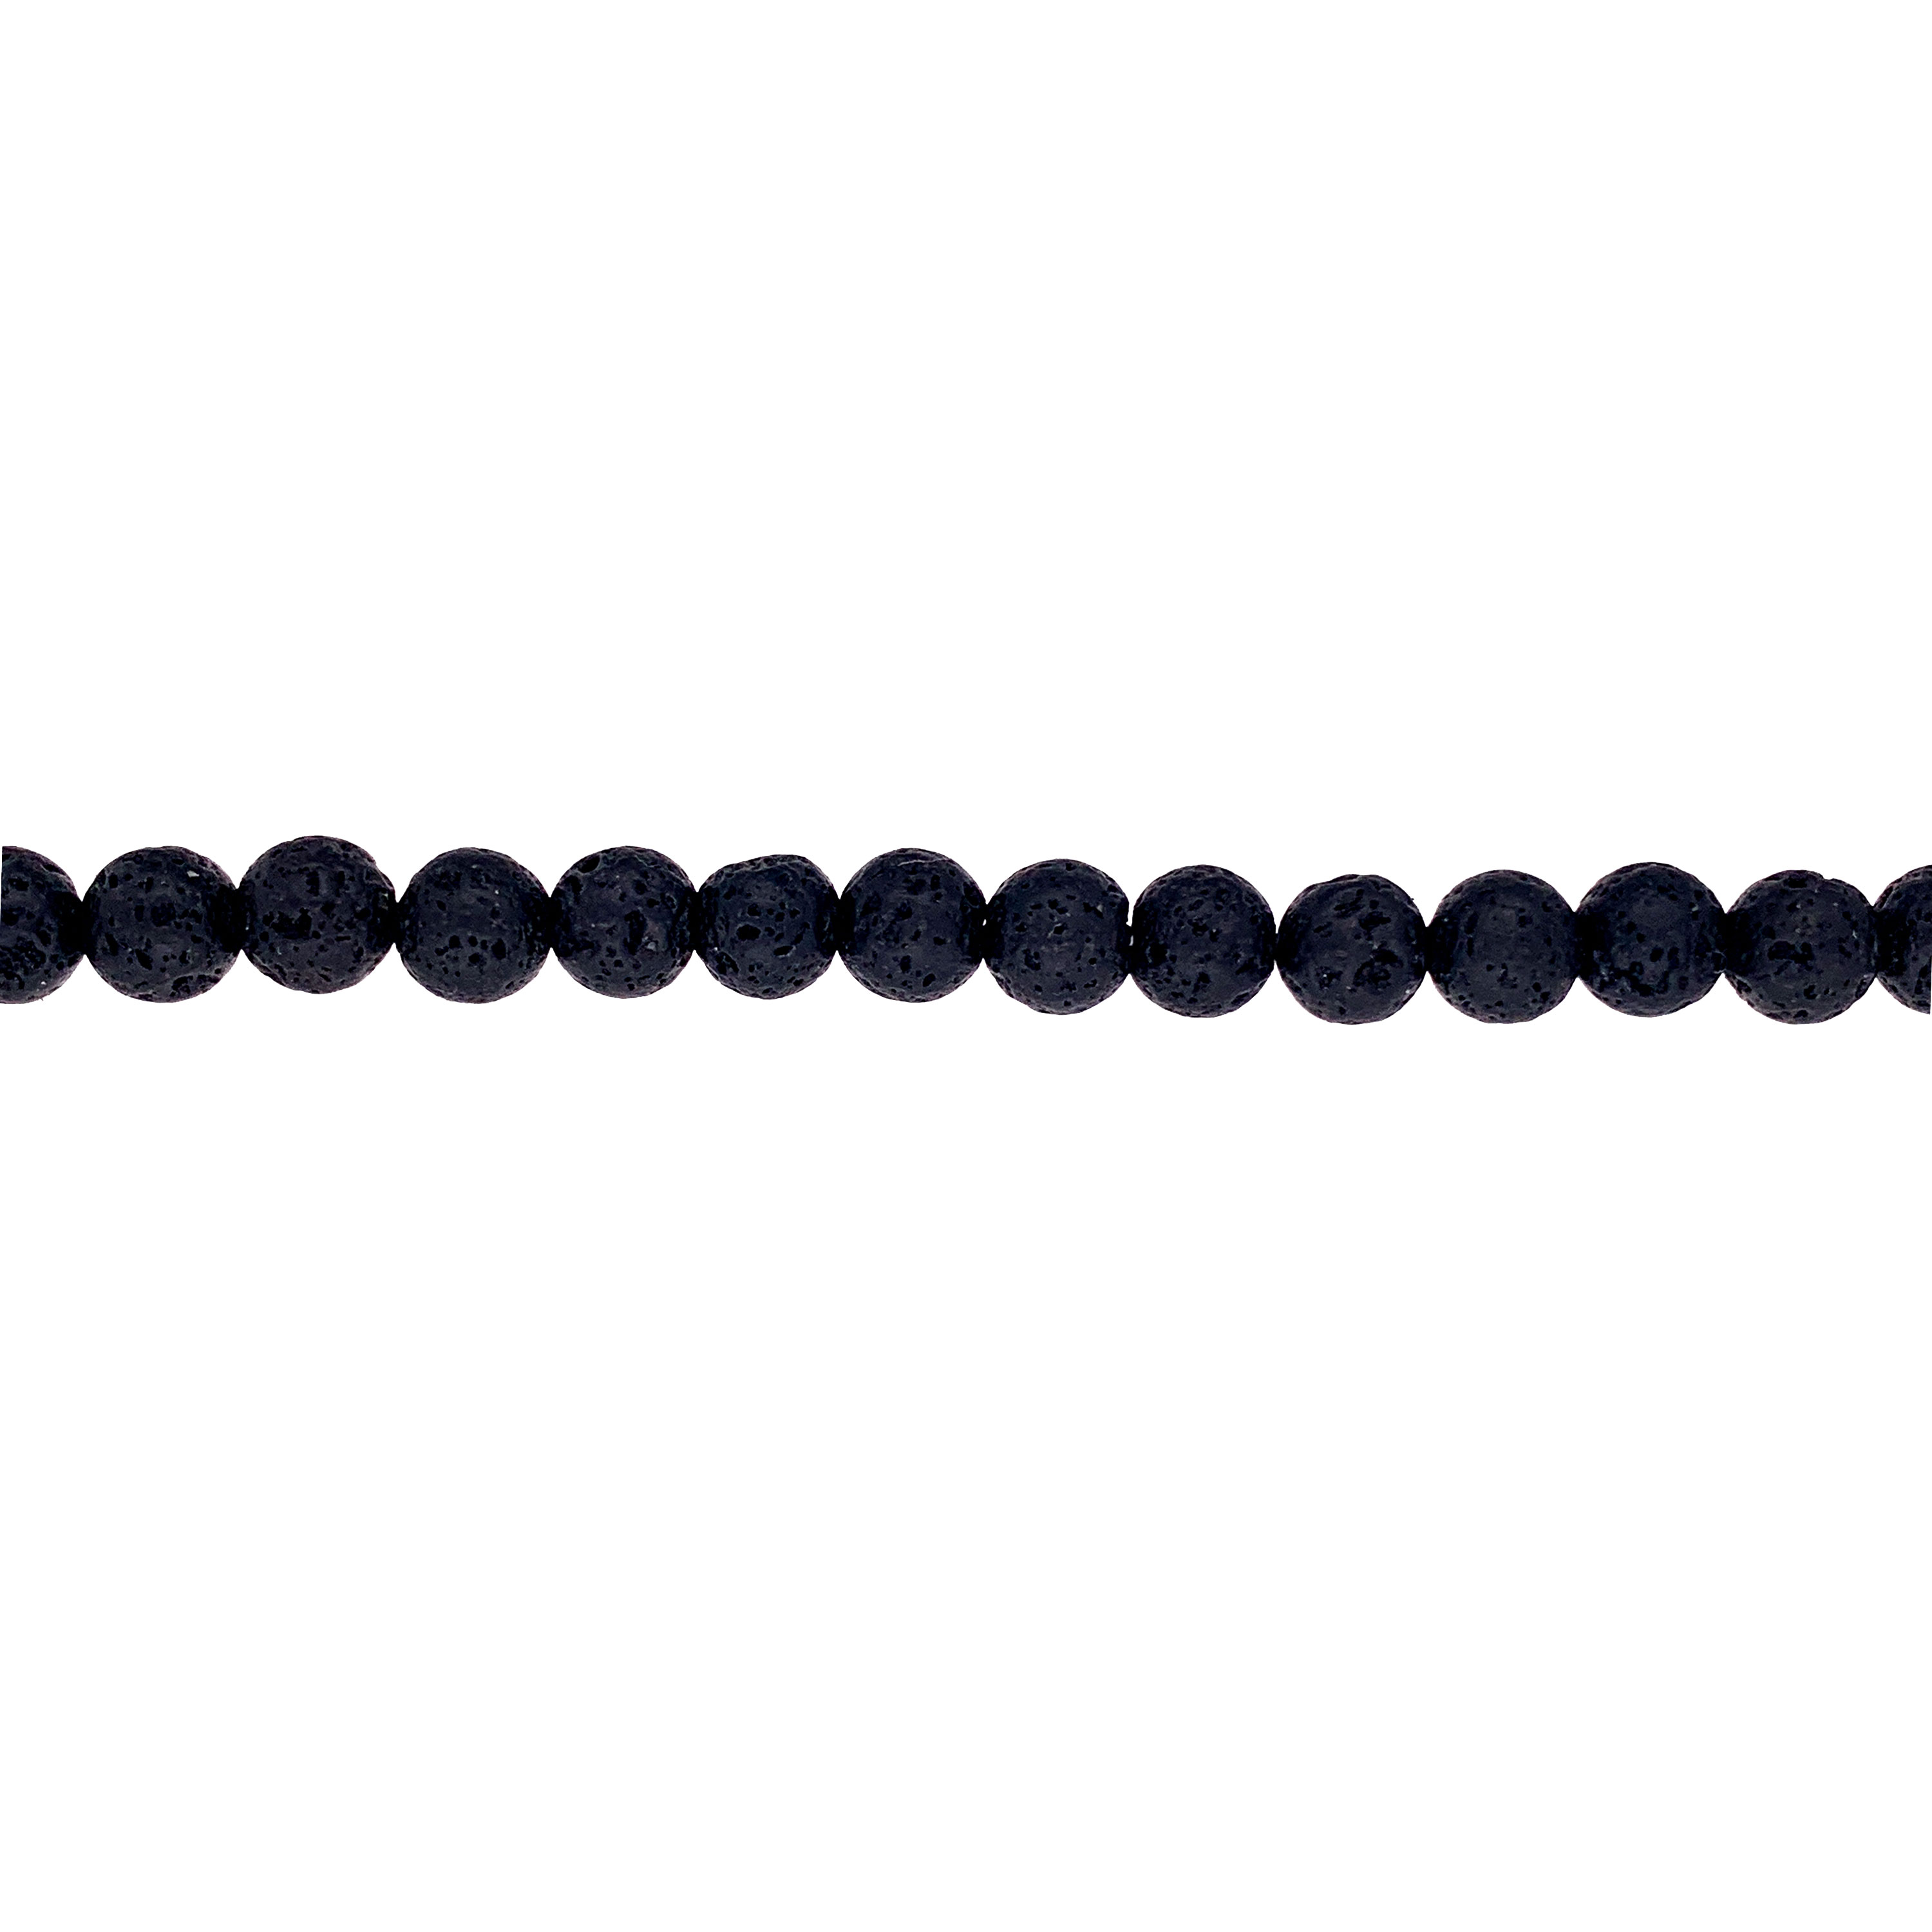 6mm Black Lava Beads